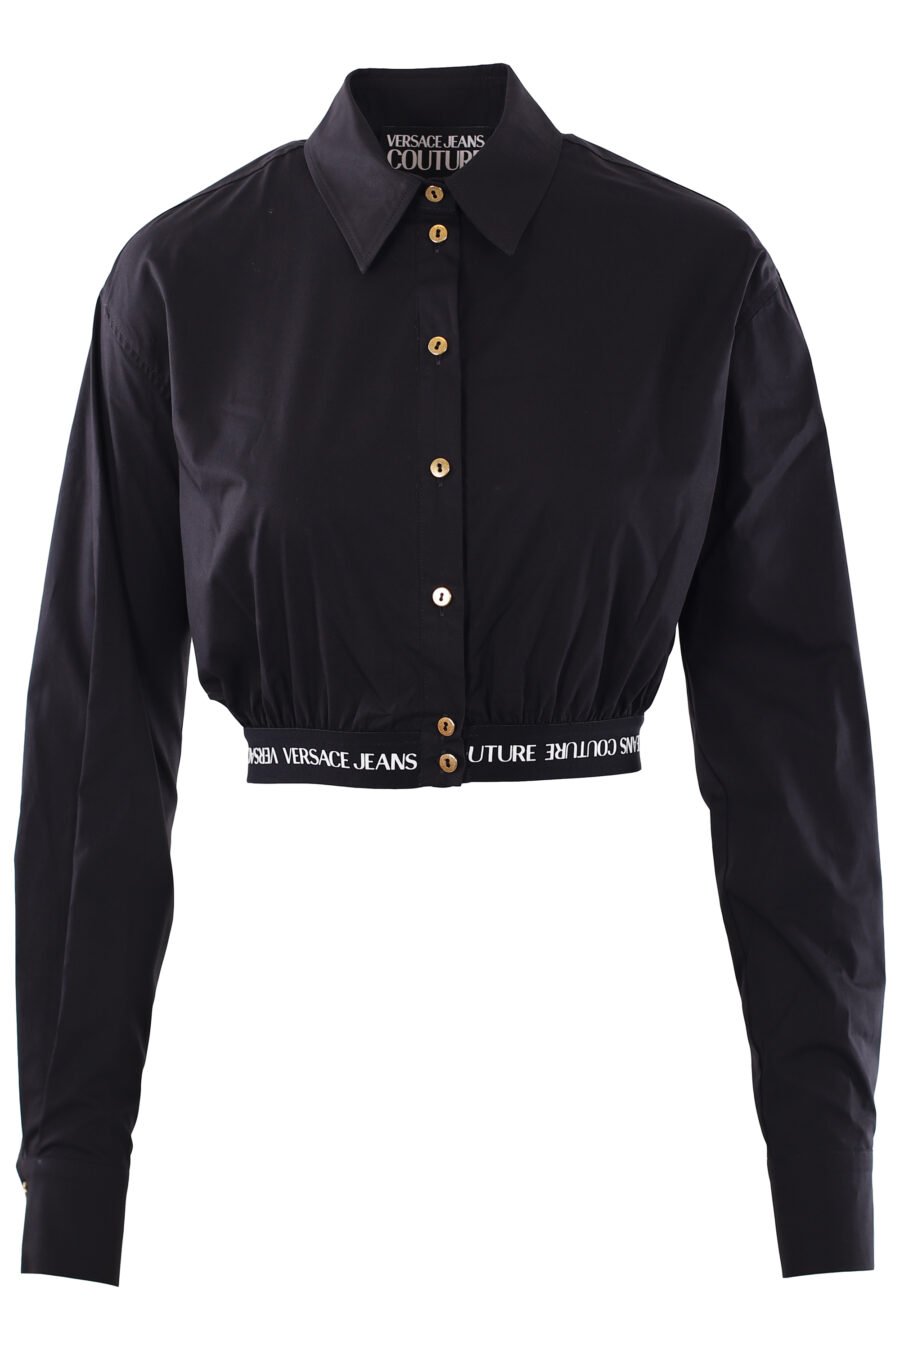 Black cropped long sleeve shirt with ribbon logo - IMG 0277